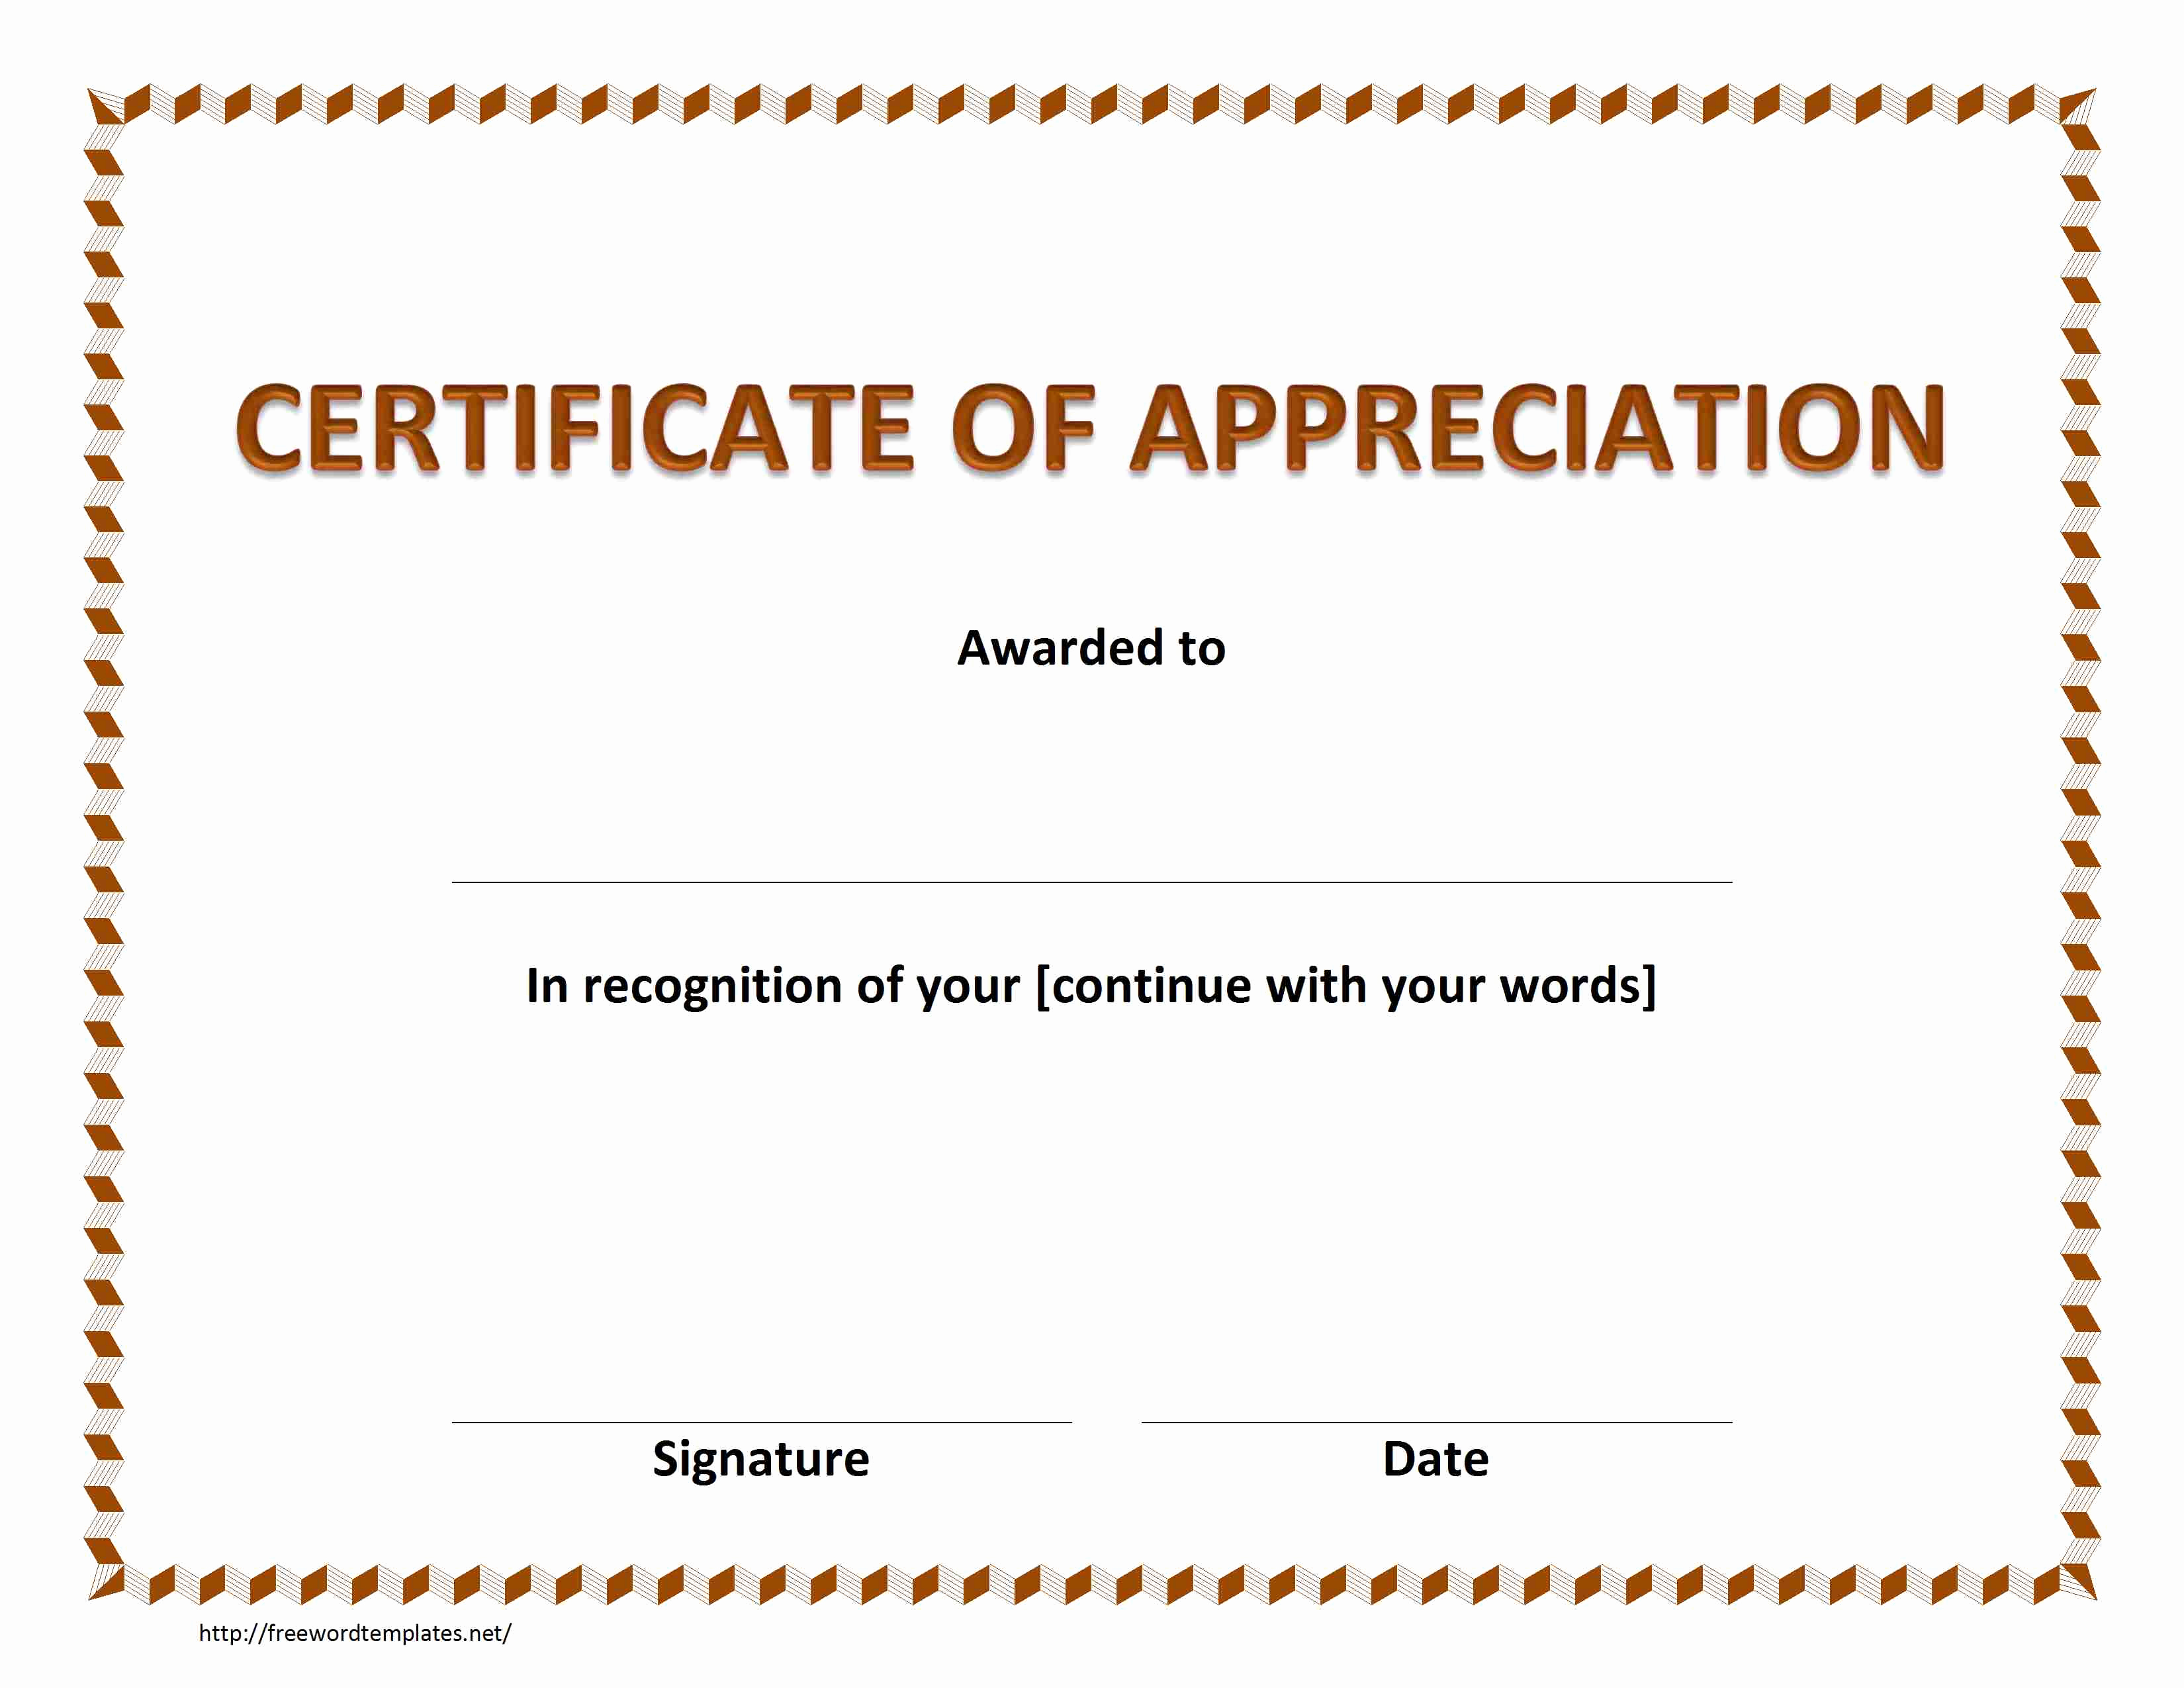 Certificate Of Appreciation Wording Beautiful Certificate Of Appreciation